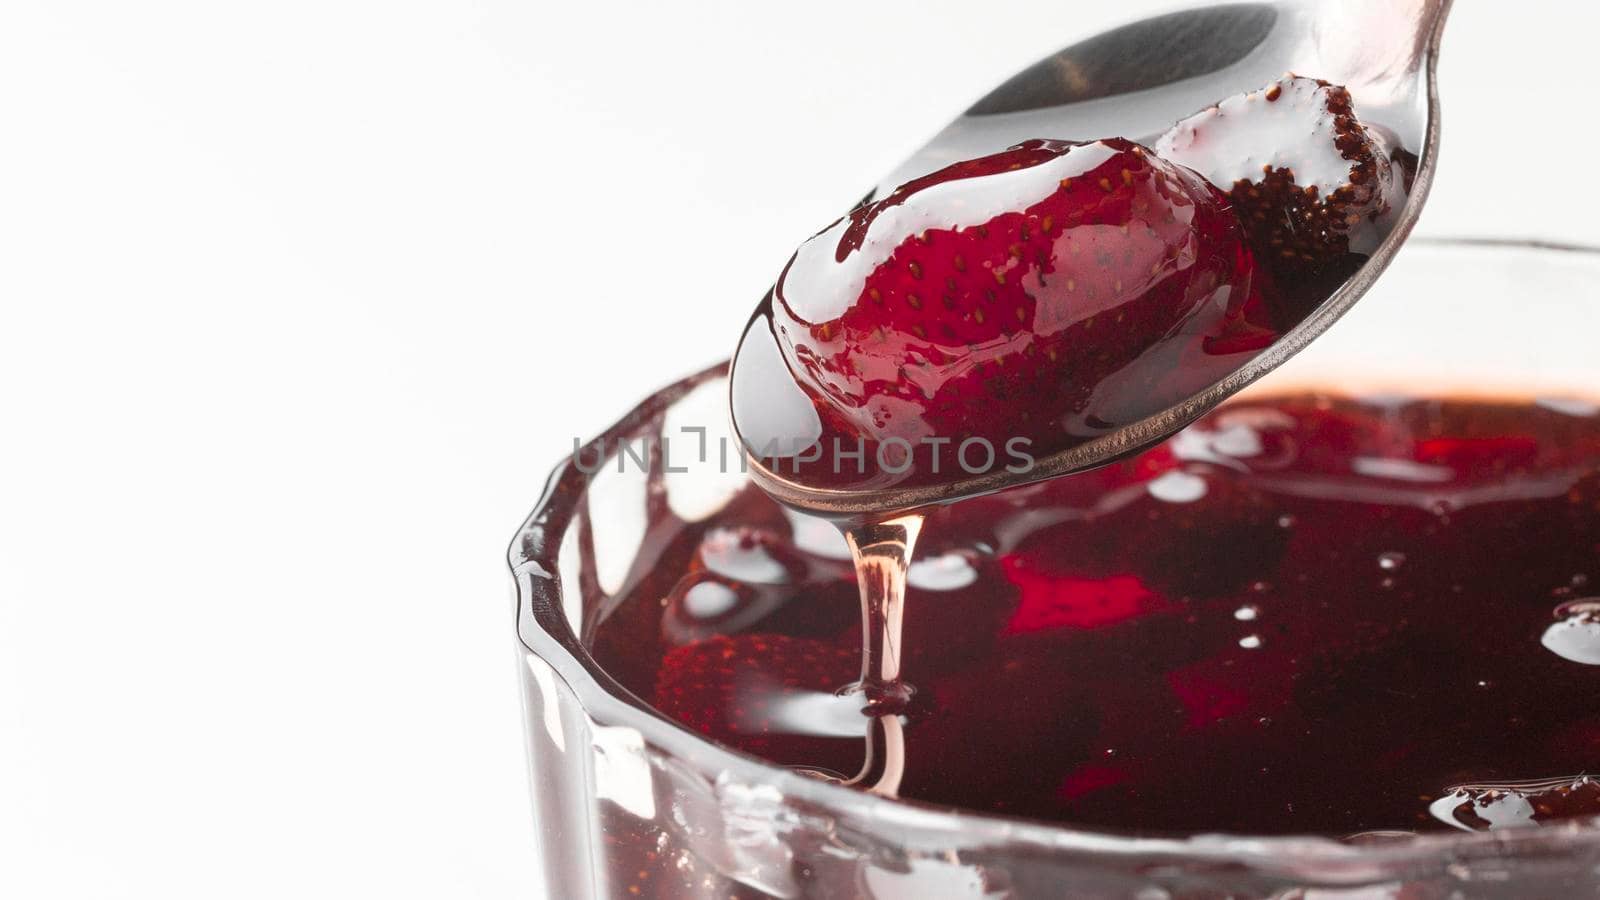 strawberry jam glass. Beautiful photo